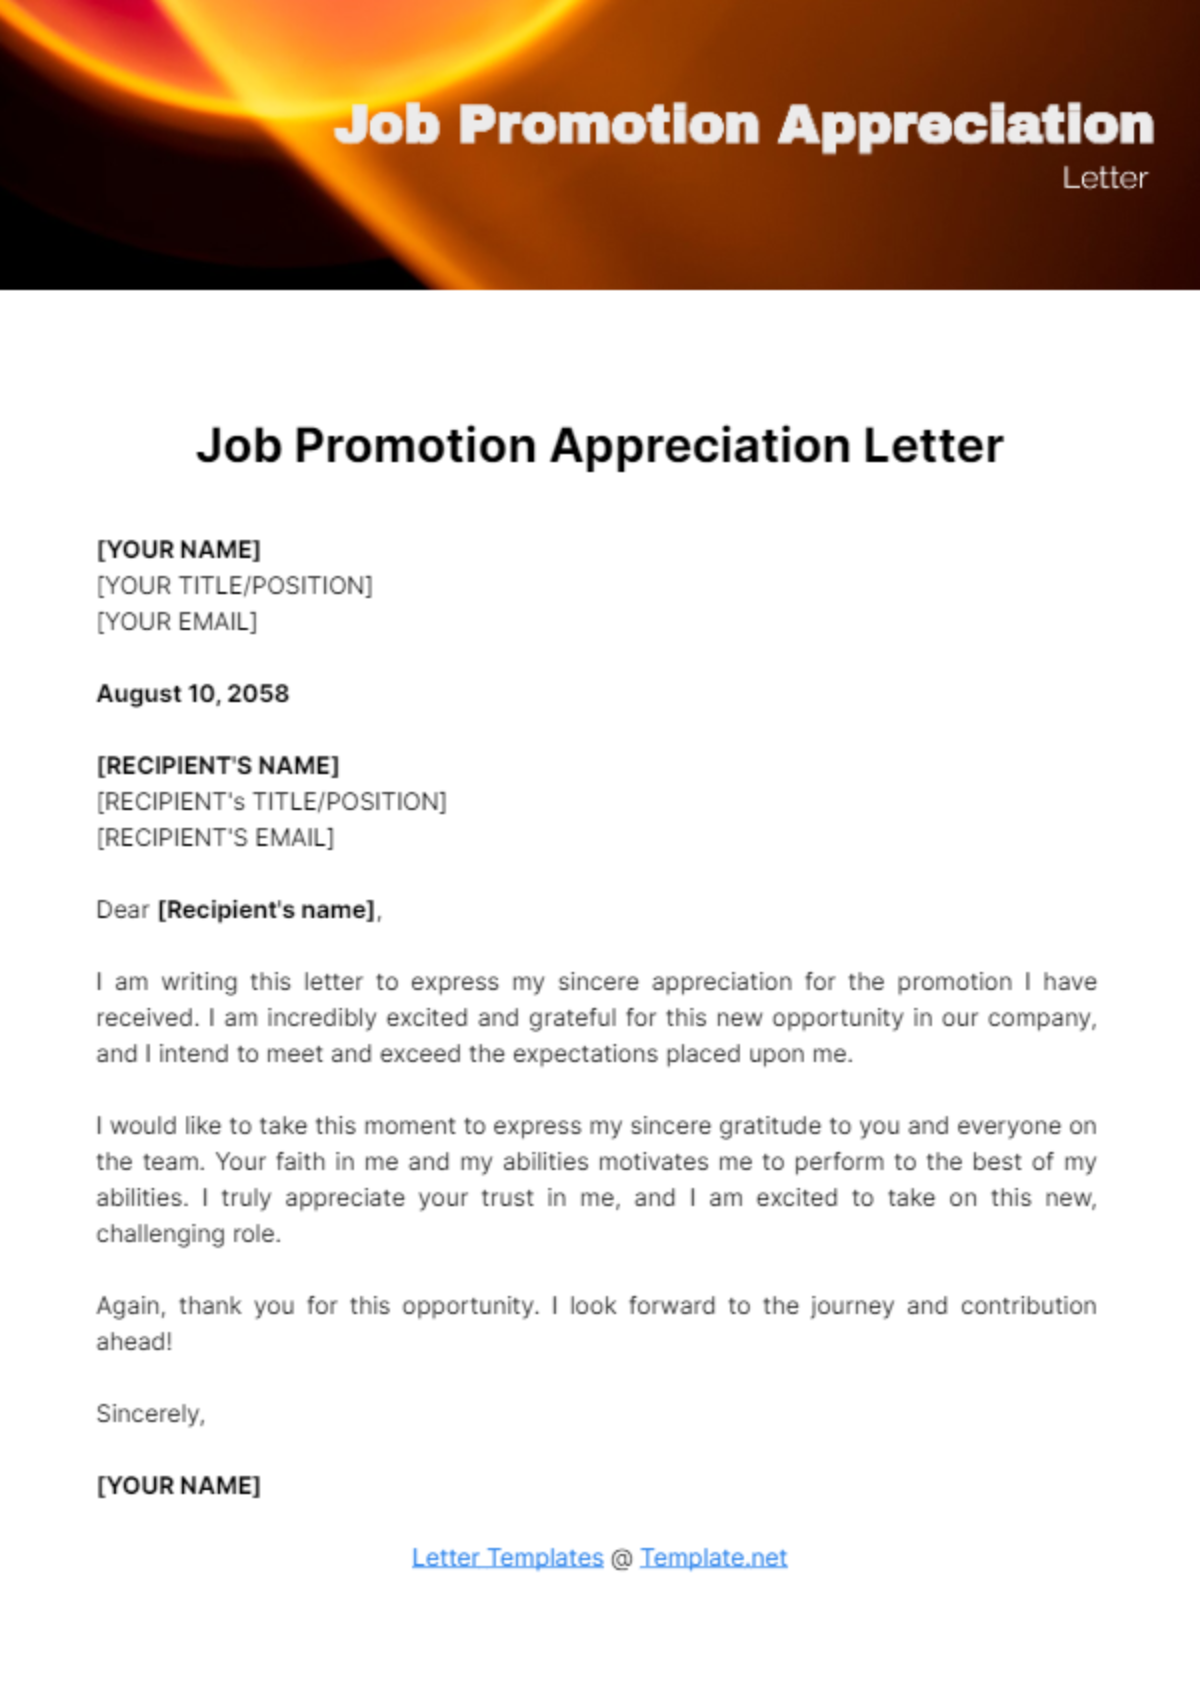 Free Job Promotion Appreciation Letter Template